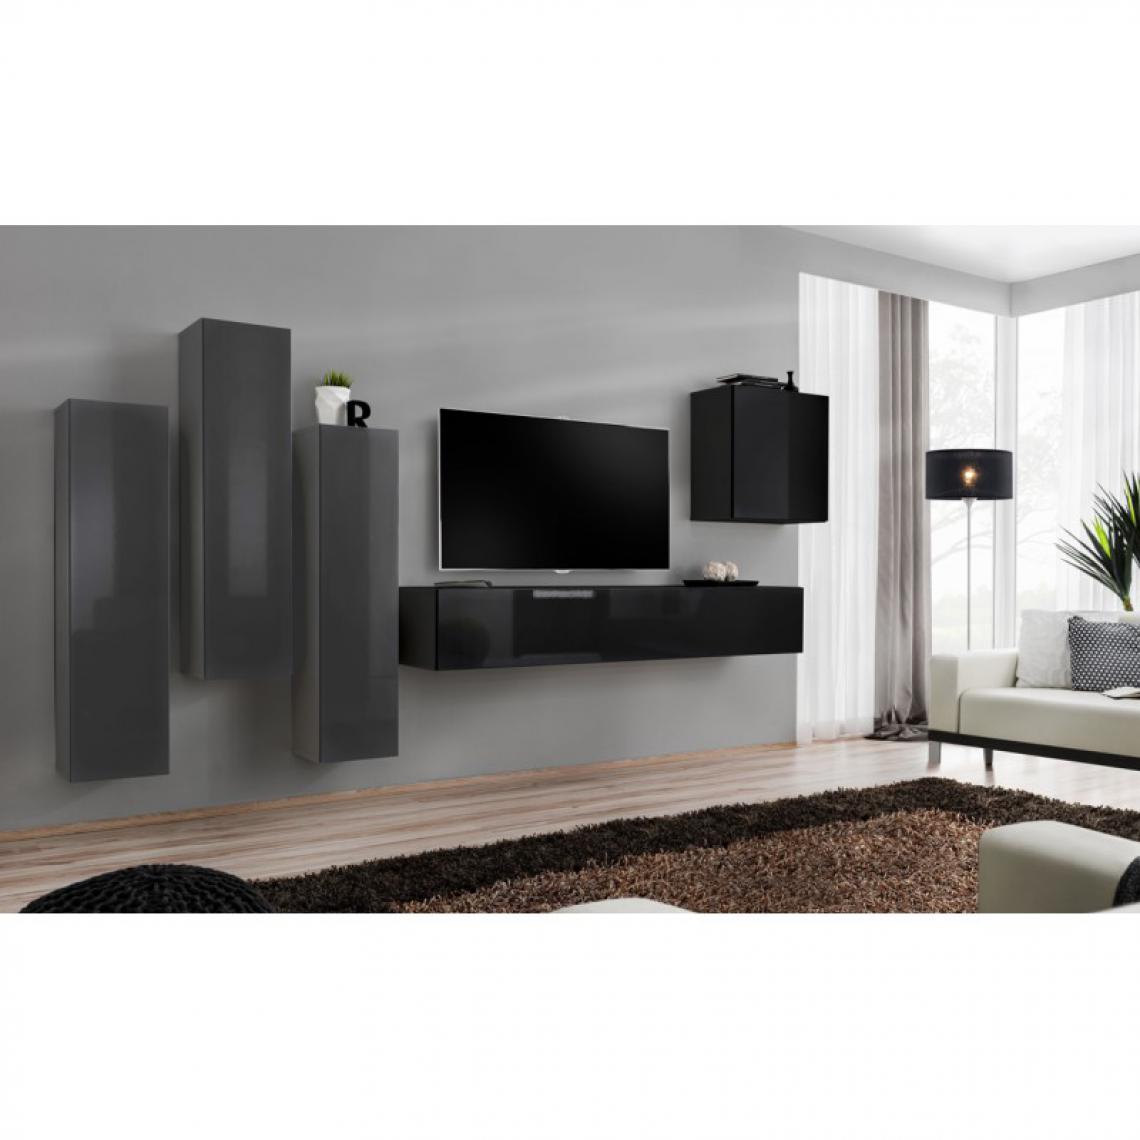 Ac-Deco - Meuble TV Mural Design Switch III 330cm Gris & Noir - Meubles TV, Hi-Fi